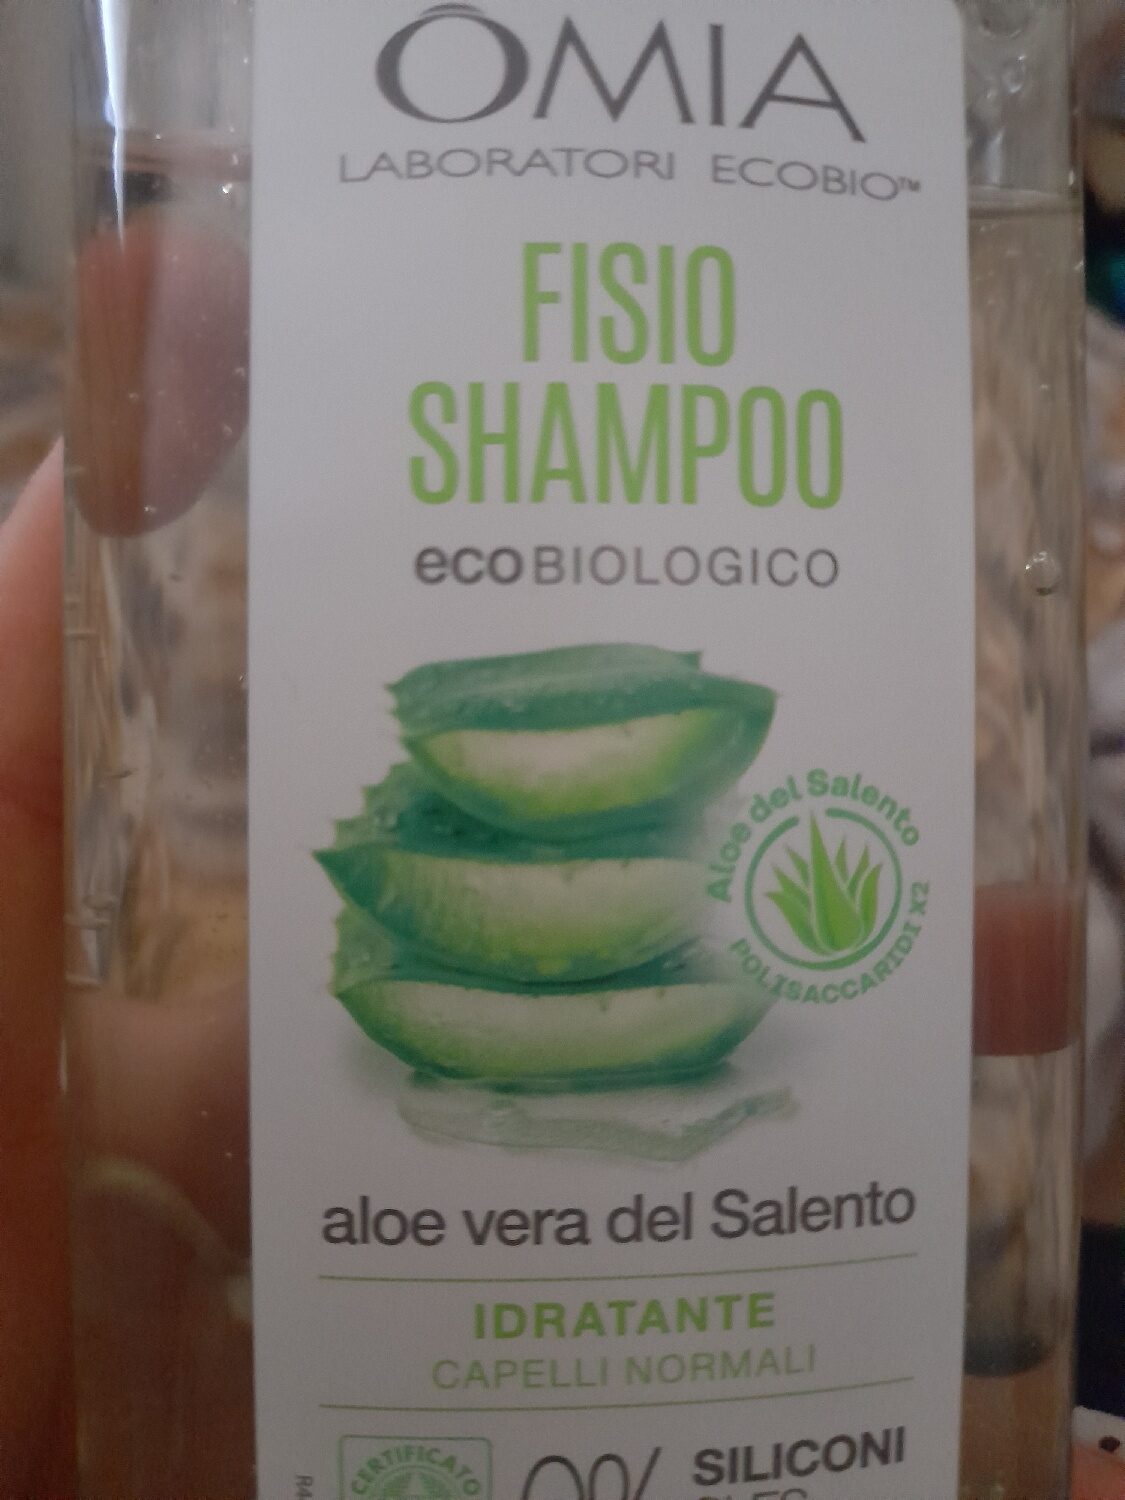 Fisio Shampoo - Product - xx